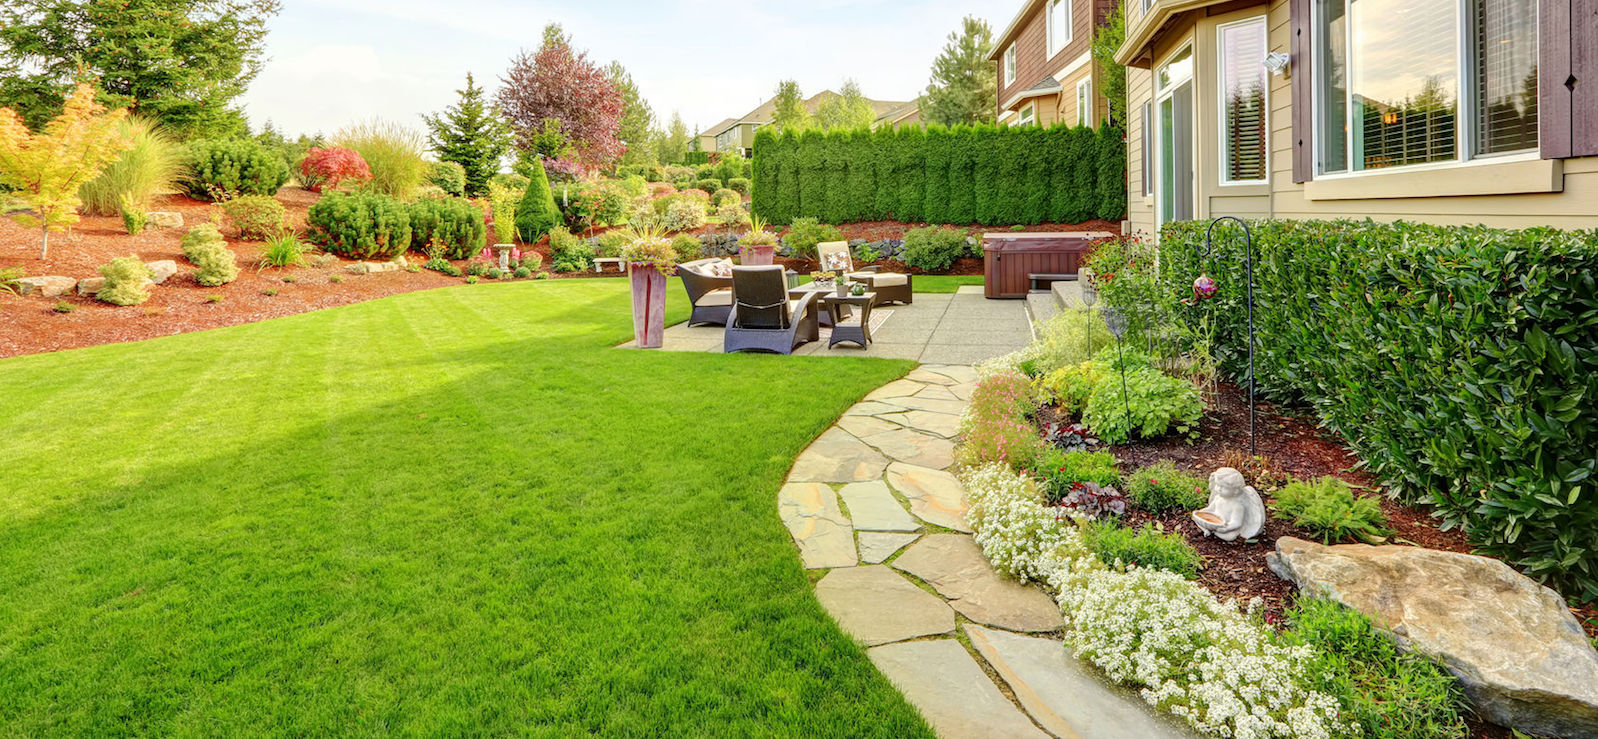 impressive backyard landscape design with cozy patio area